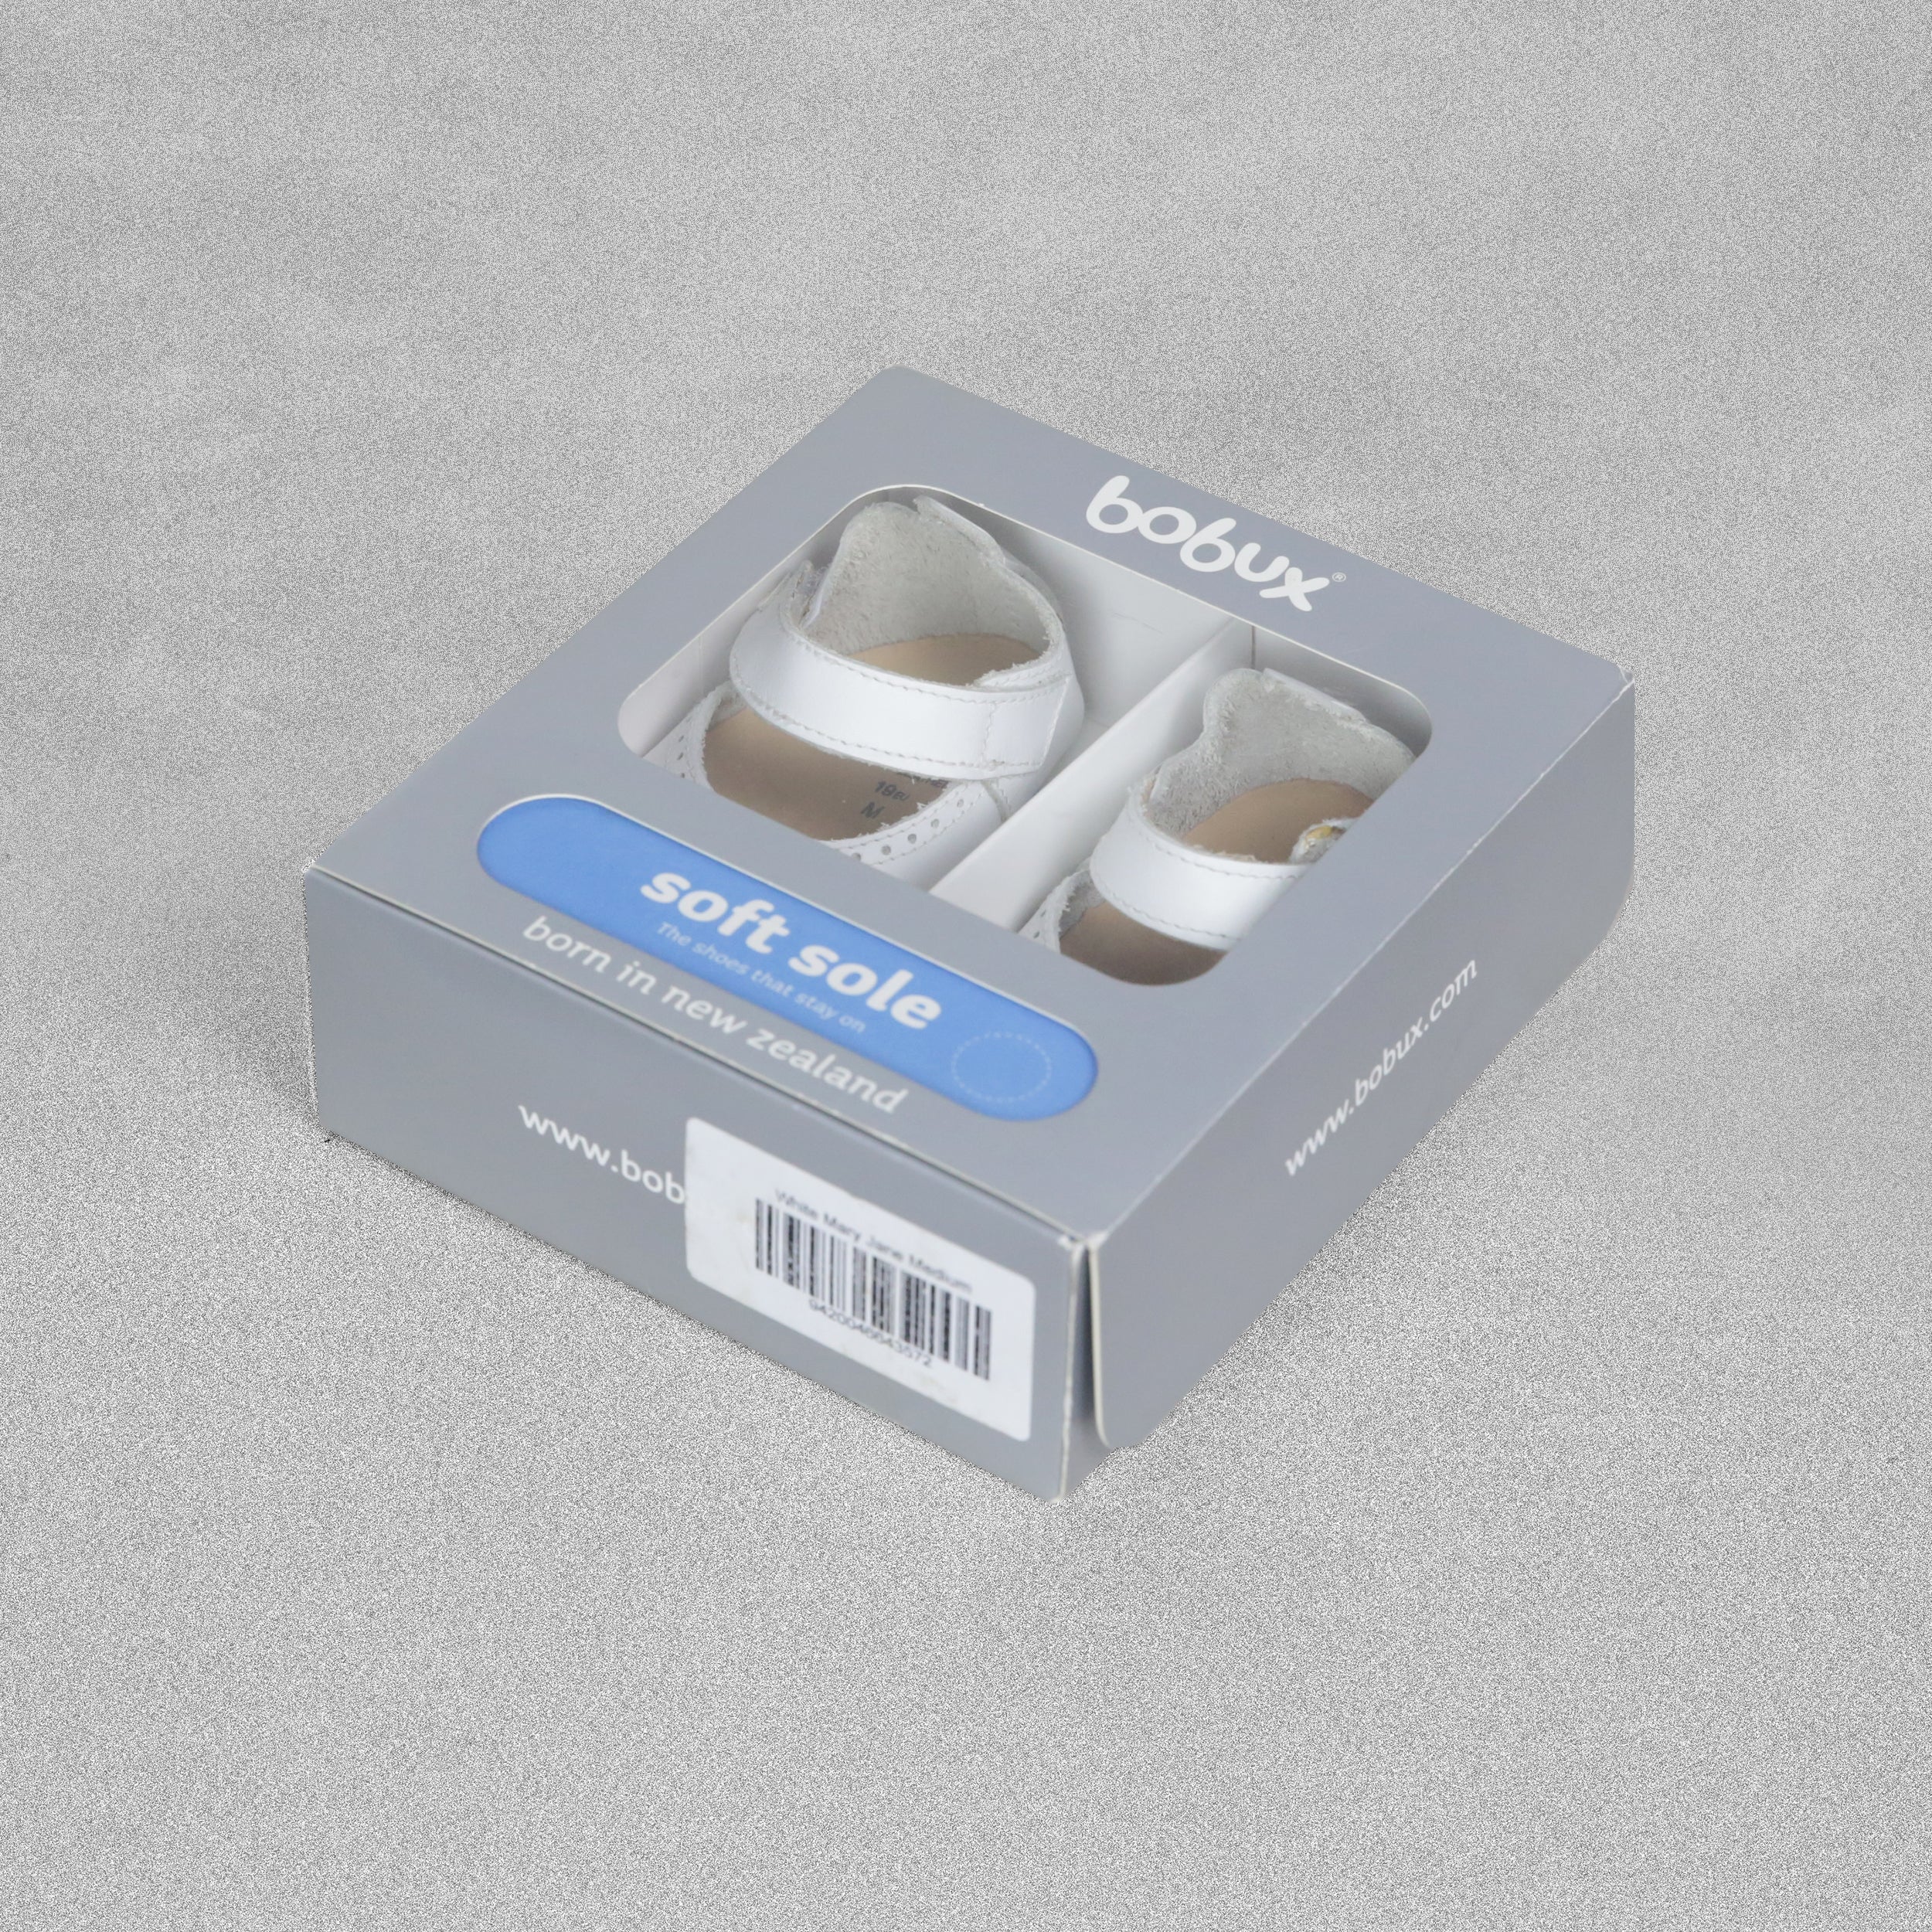 Bobux Soft Sole Baby Shoe 'White with Velcro Strap' - Medium /9-15 Months